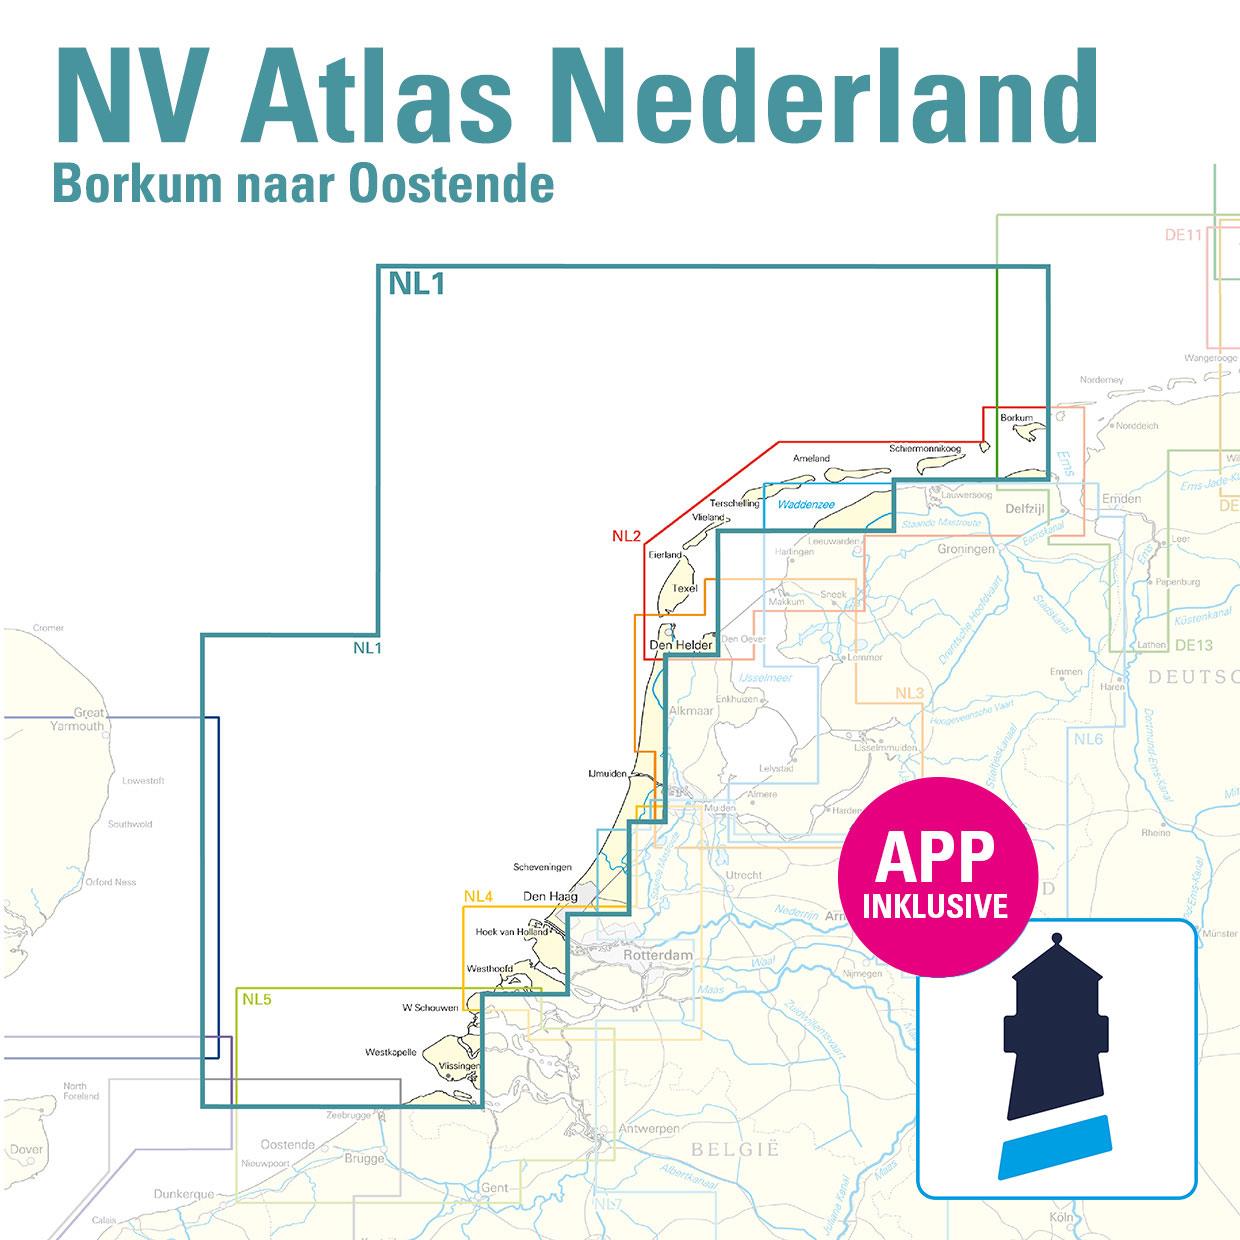 ABO - NV Charts Nederland NL1 - Borkum naar Oostende